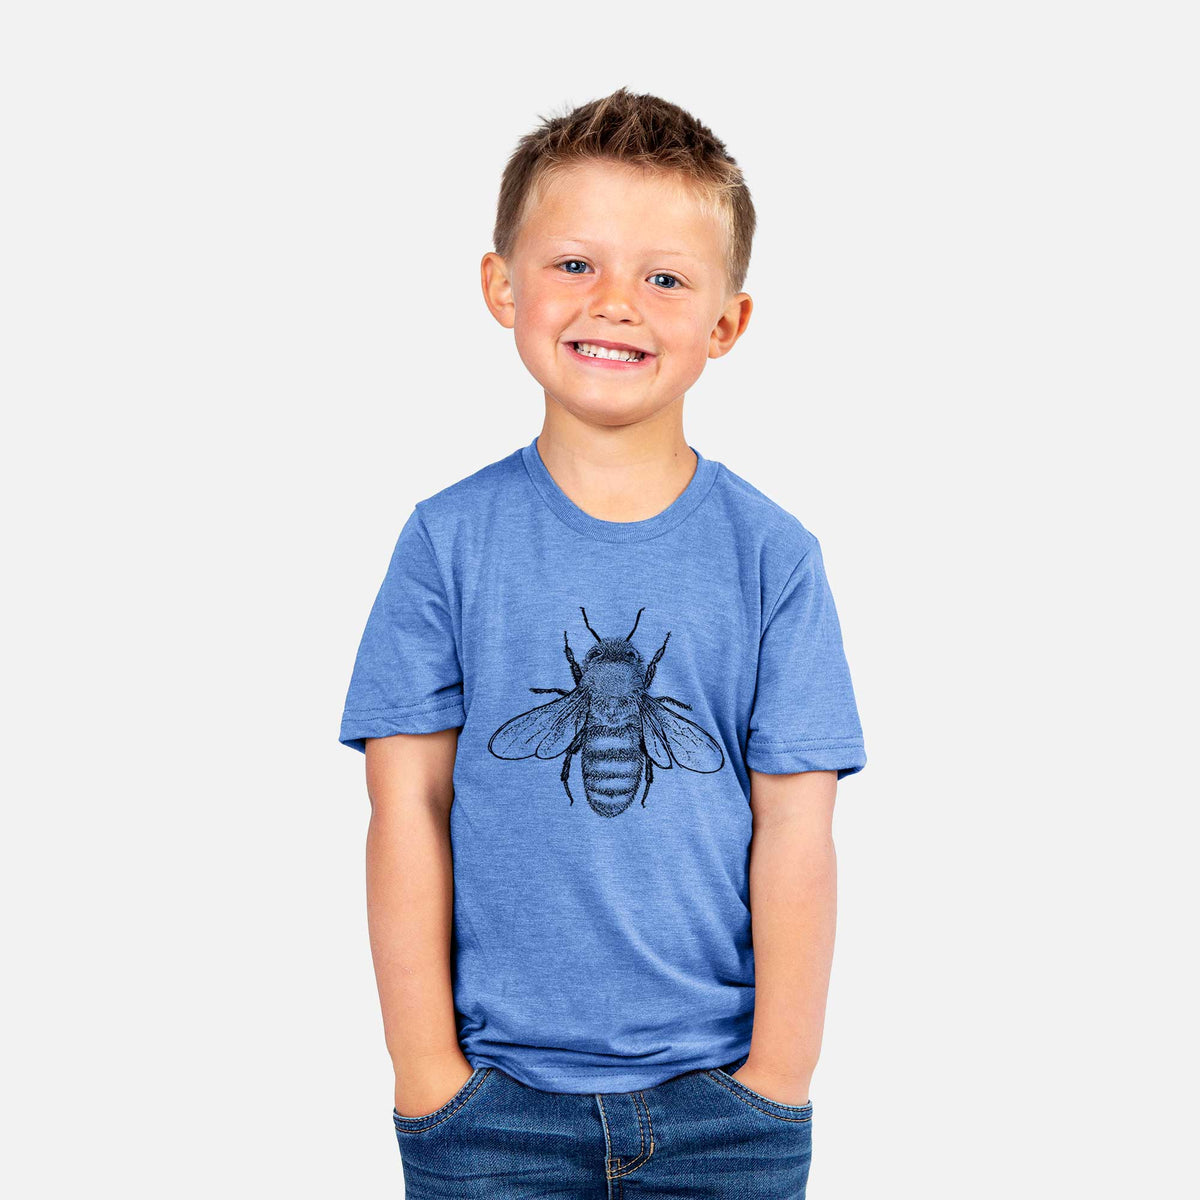 Apis Mellifera - Honey Bee - Kids Shirt